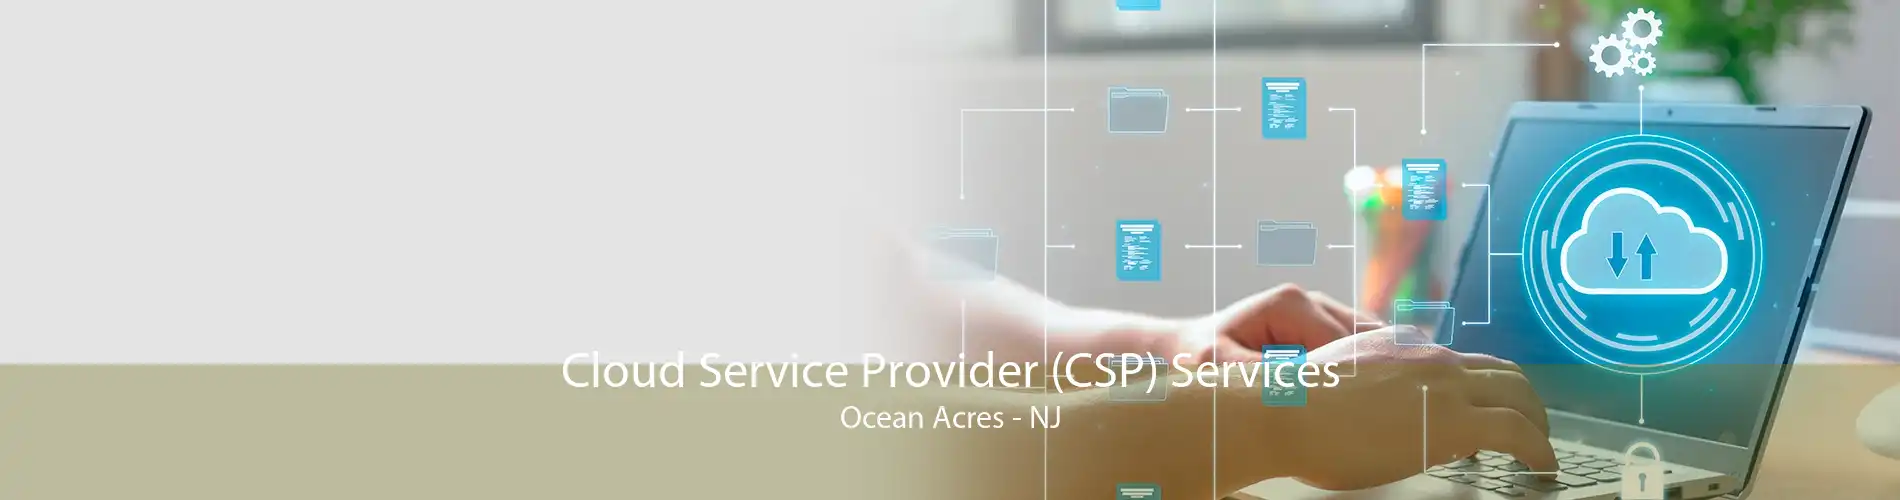 Cloud Service Provider (CSP) Services Ocean Acres - NJ